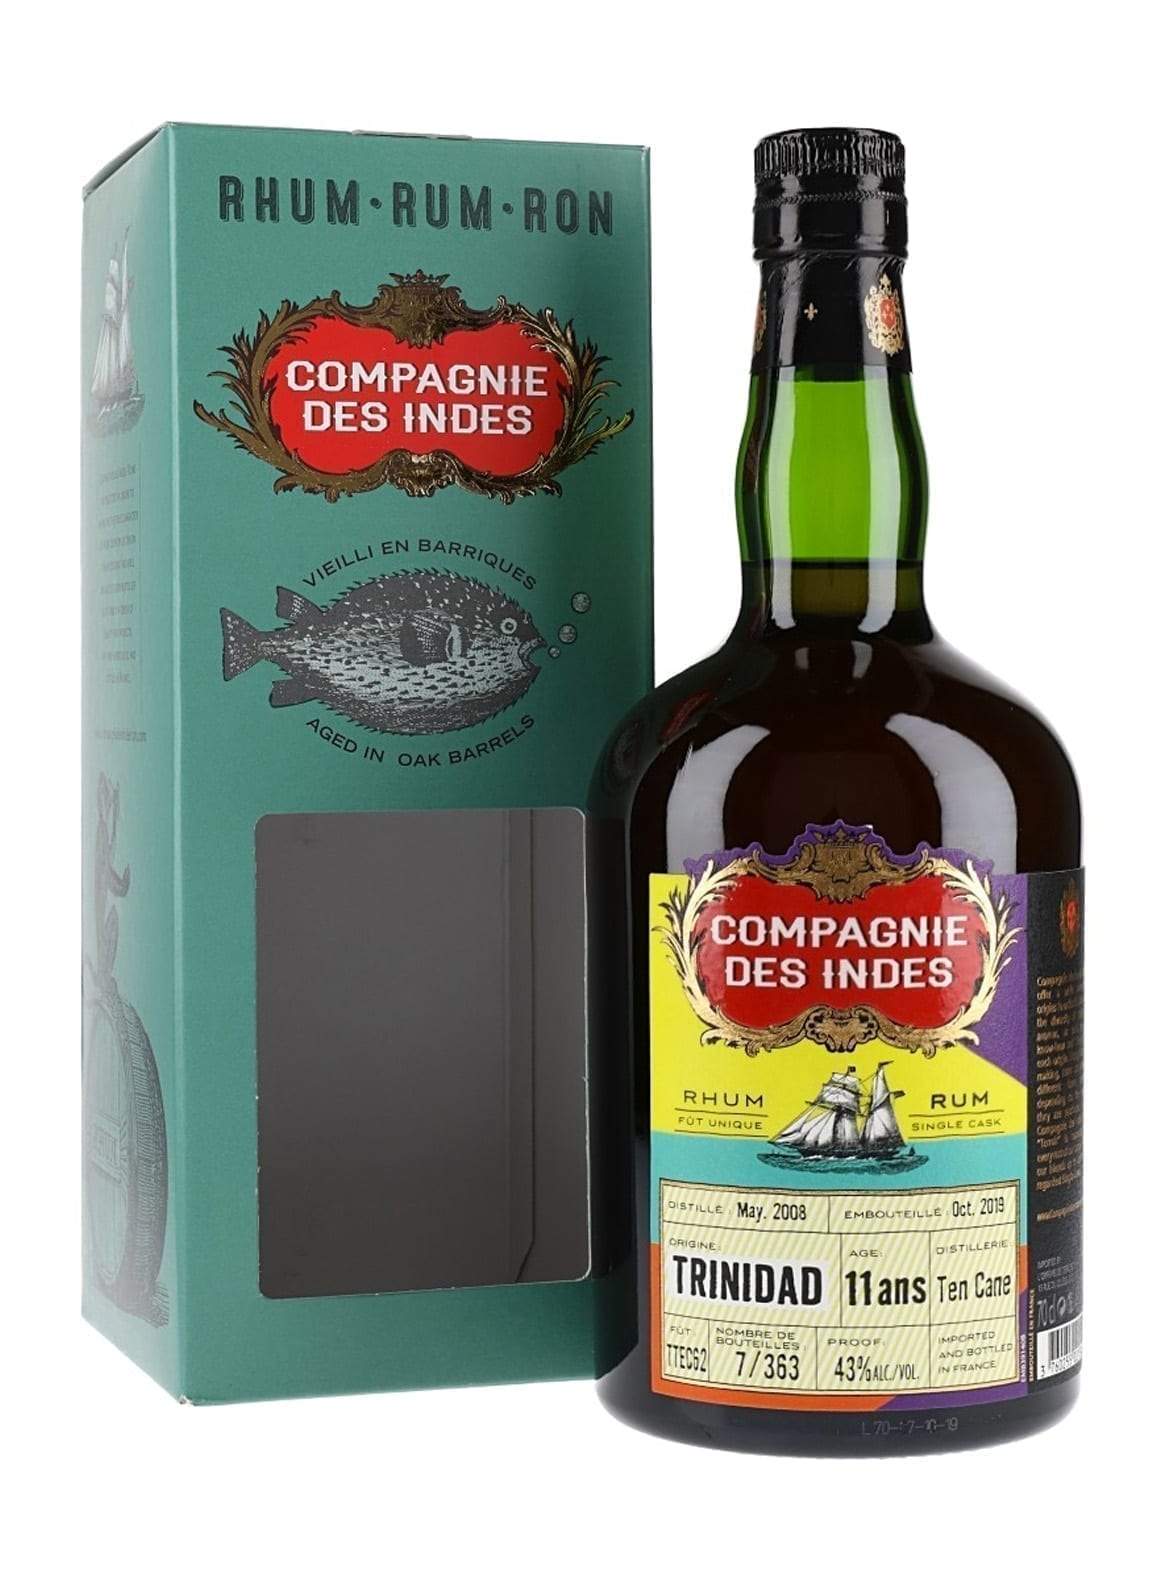 Compagnie des Indes Rum Trinidad 11 years 43% 700ml | Rum | Shop online at Spirits of France